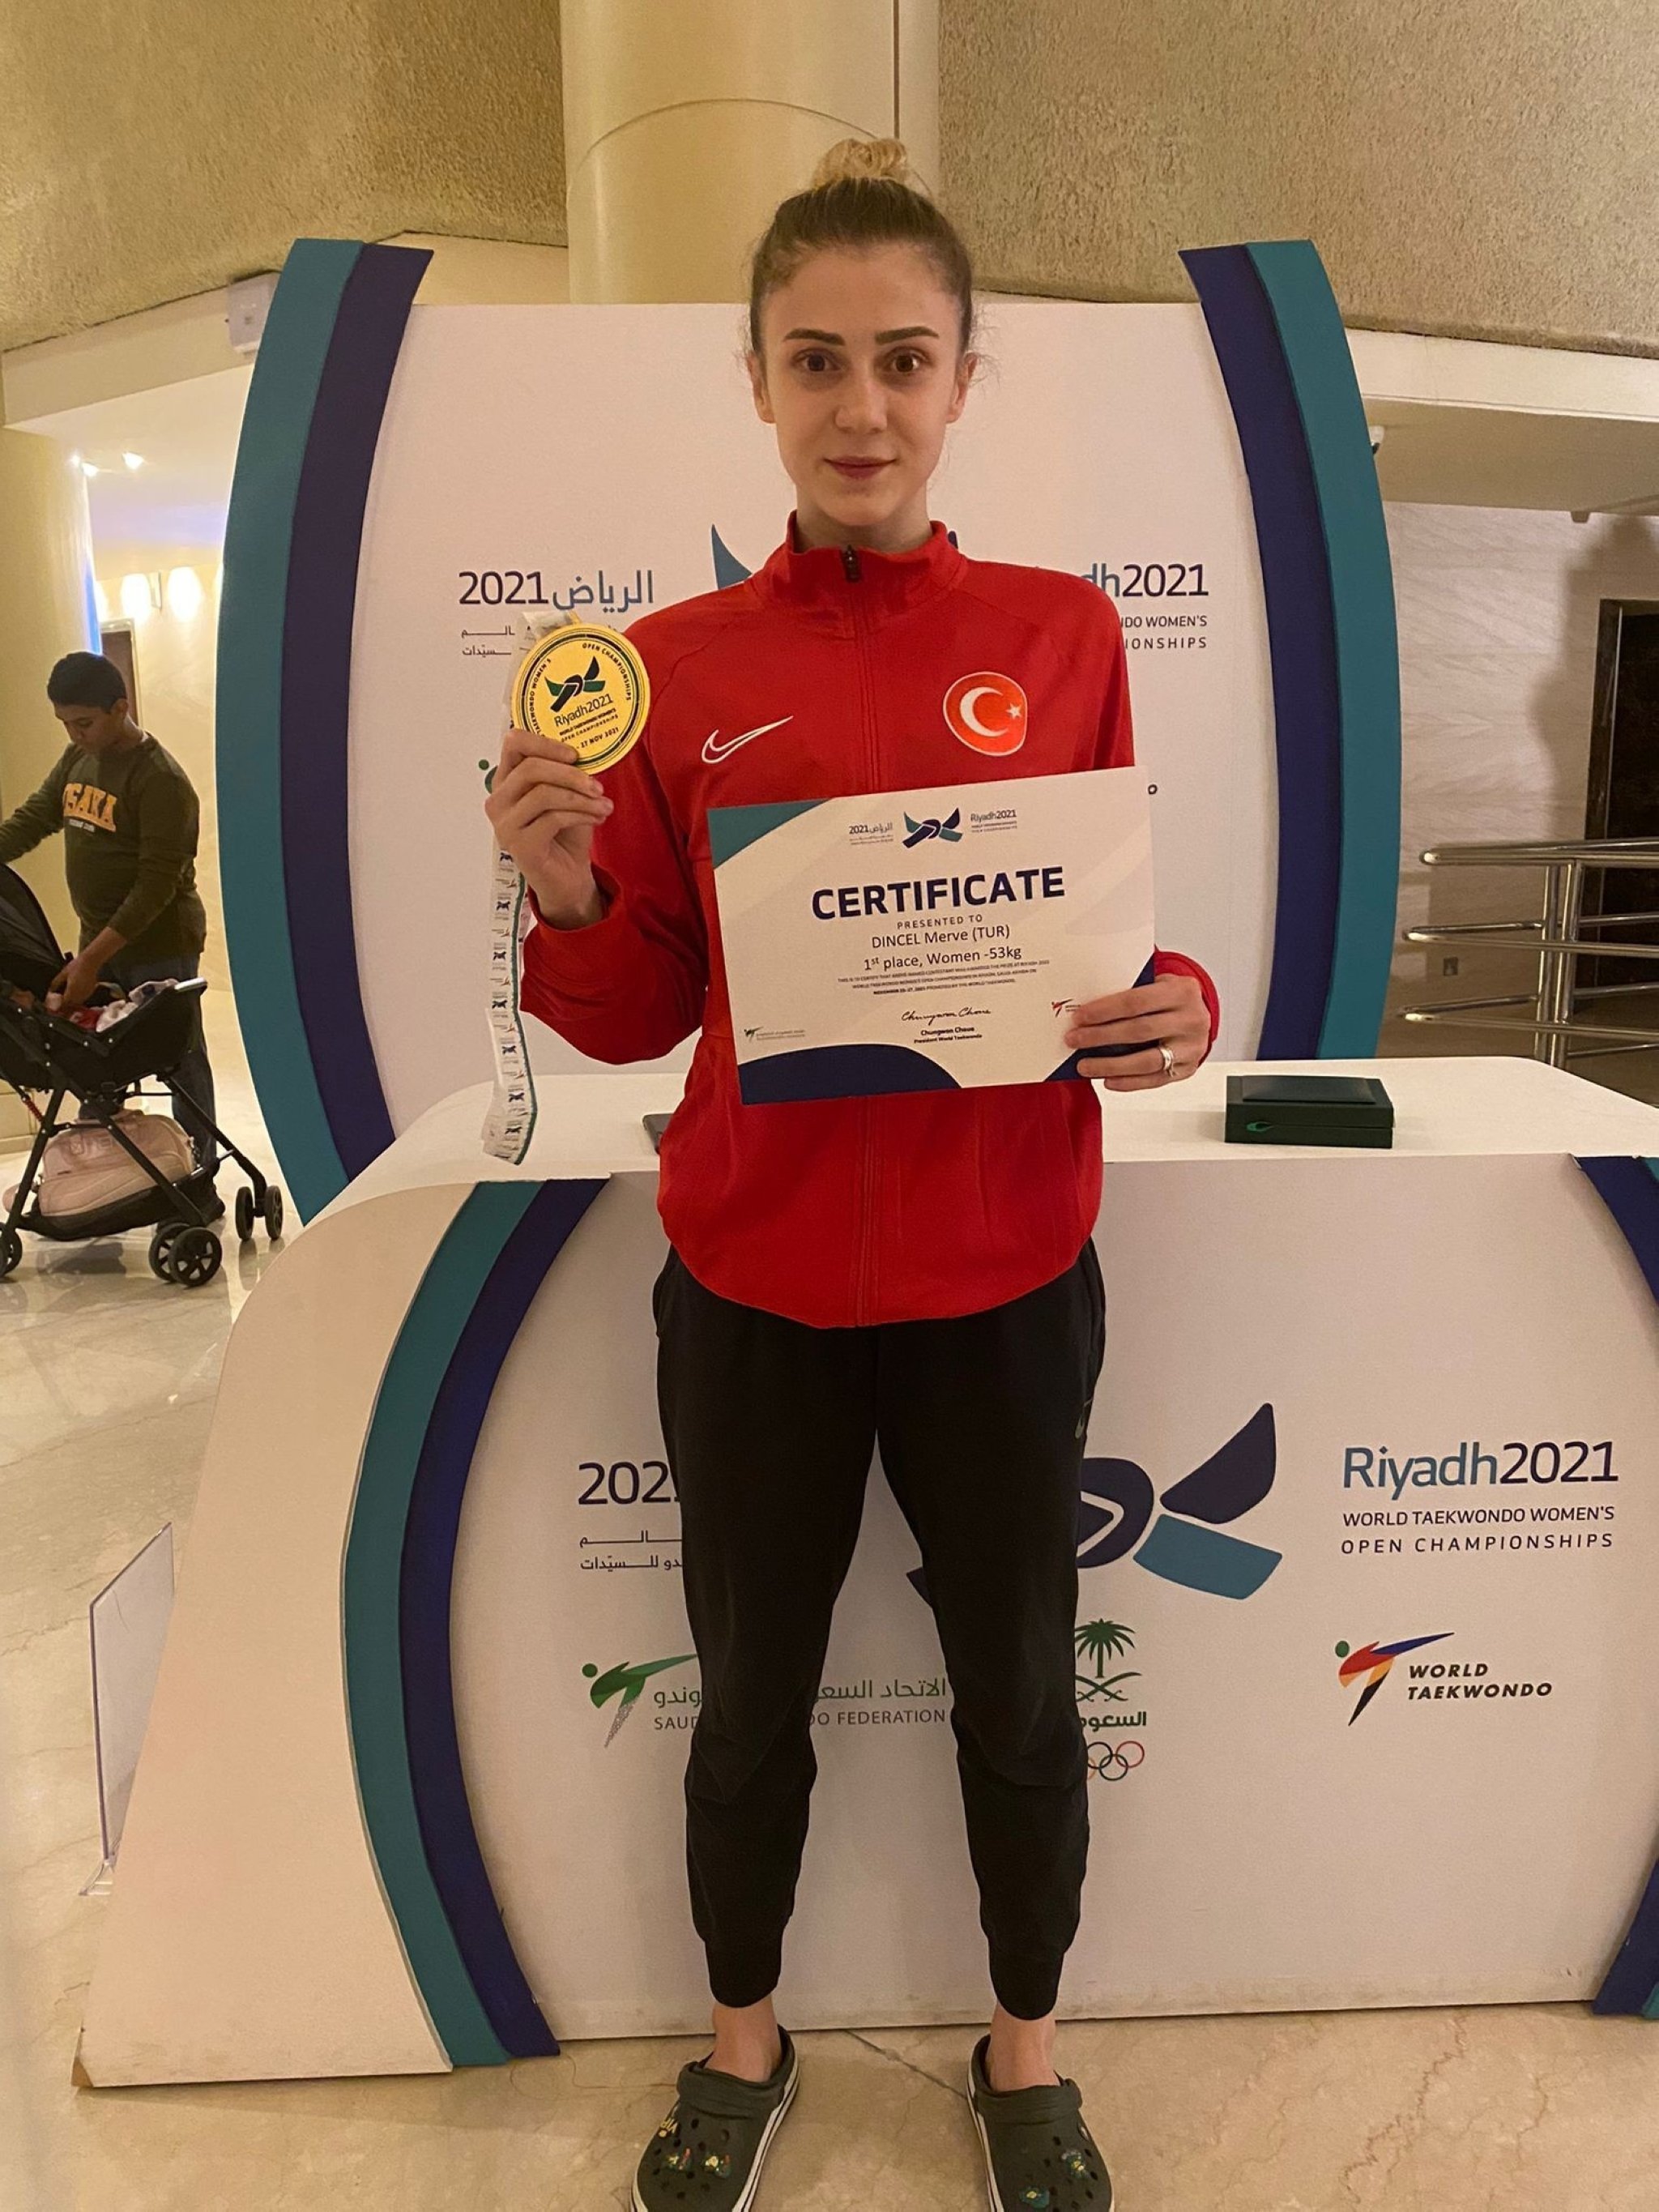 World Taekwondo Champion Mamak Municipality athlete Merve Dinçel can be seen with her medal and certificate, Riyadh, Saudi Arabia, Nov. 29, 2021. (IHA Photo)